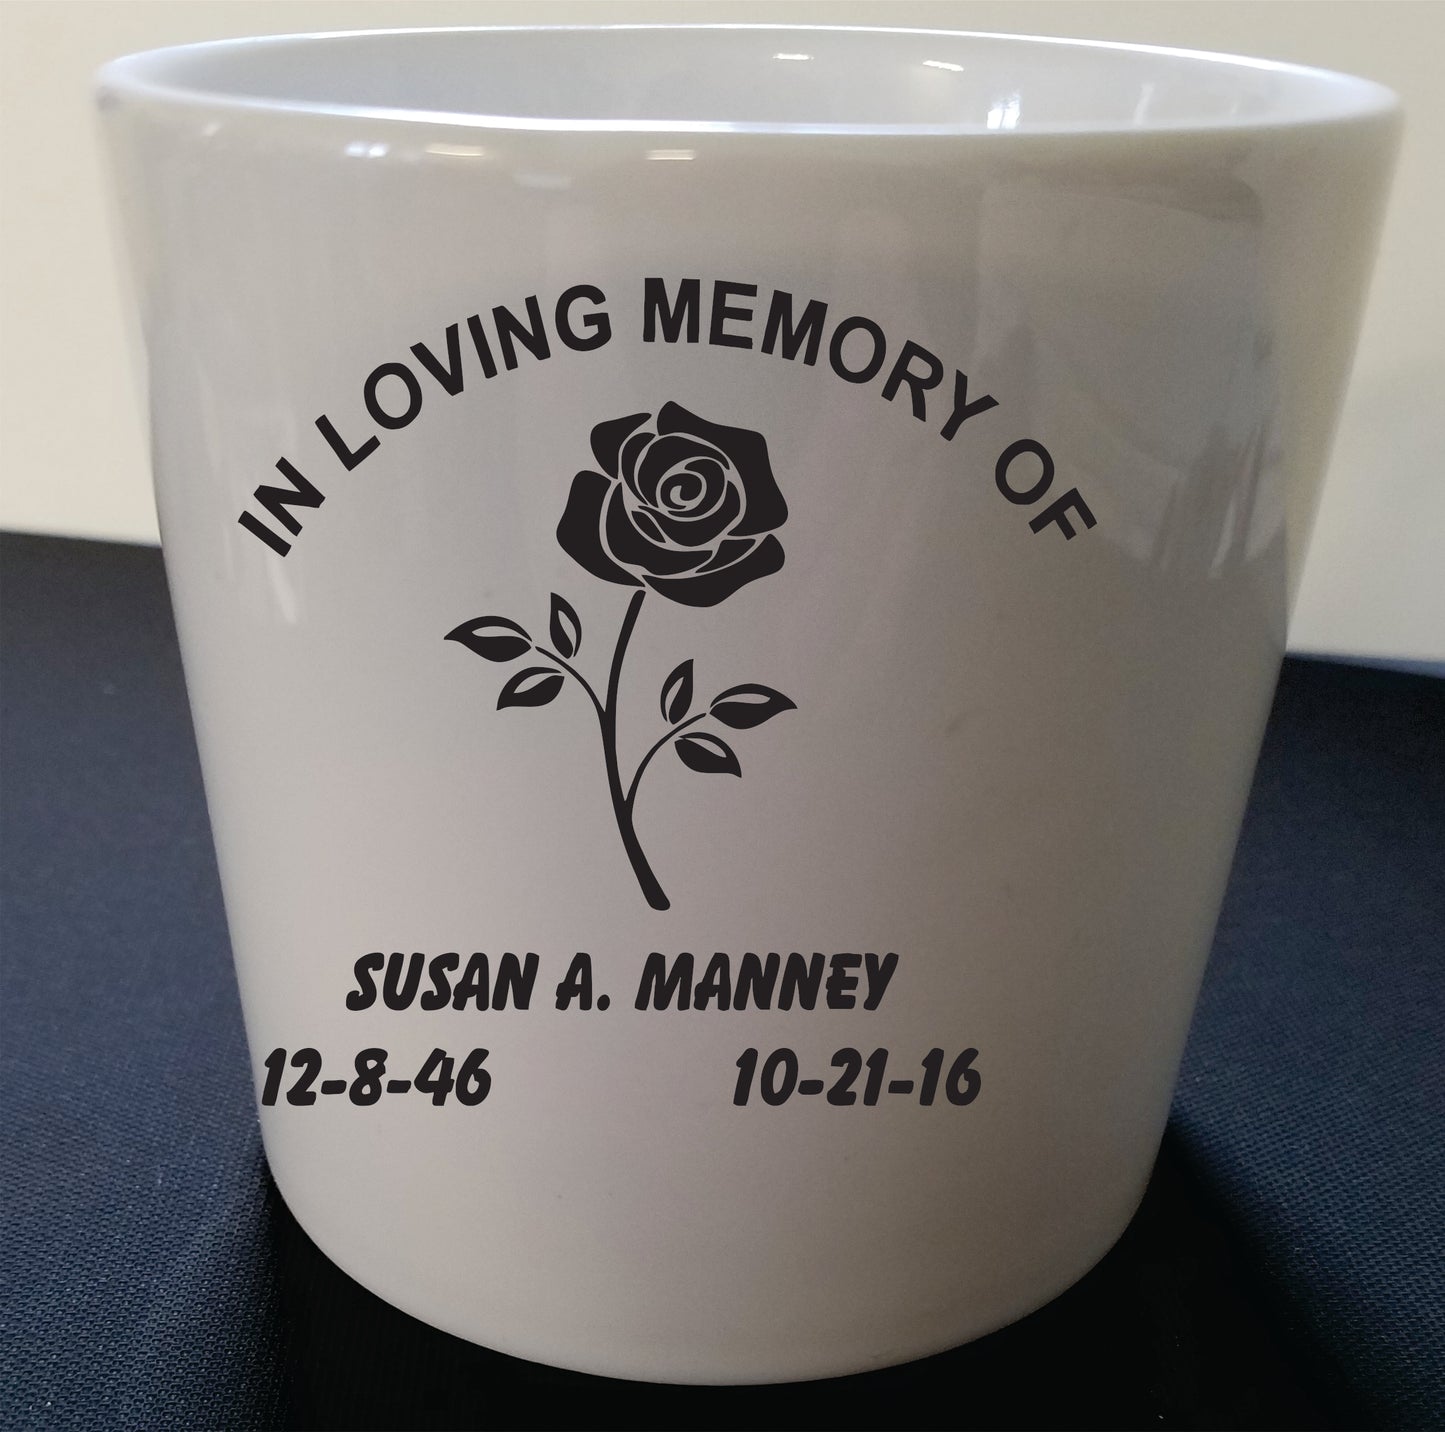 In Loving Memory of Coffee Mug